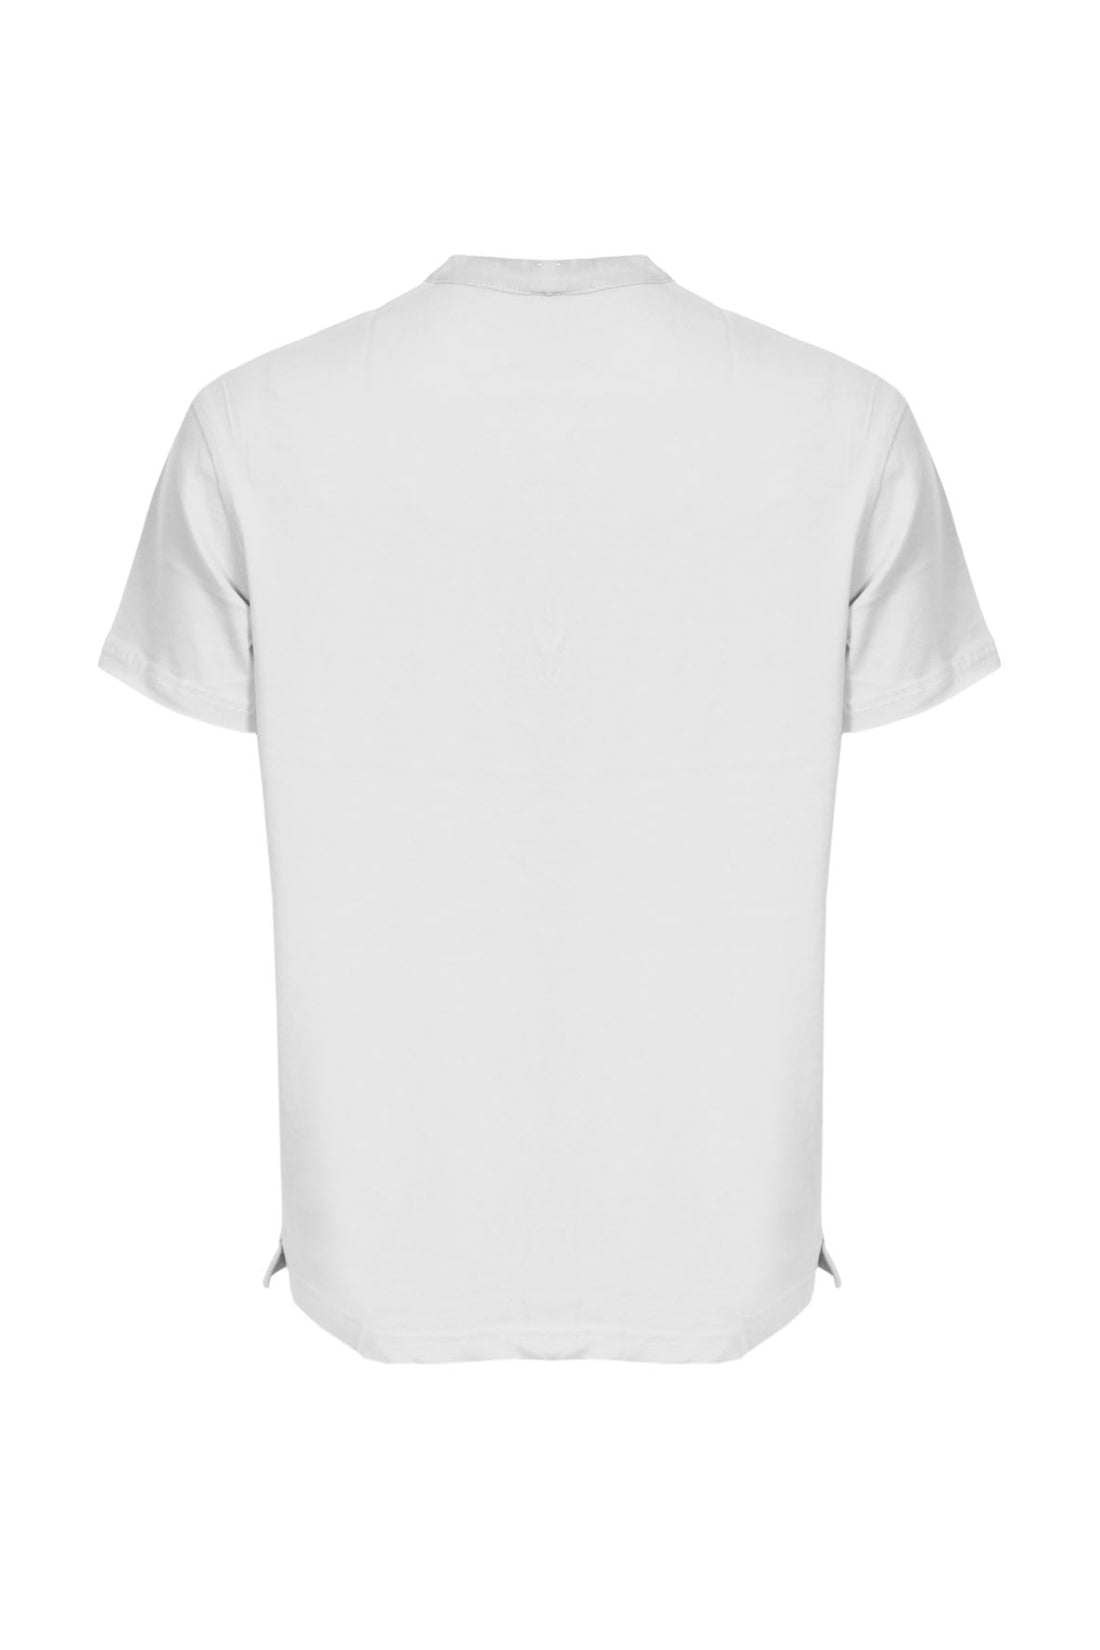 Serafino Half Sleeve Cotton T-Shirt - White